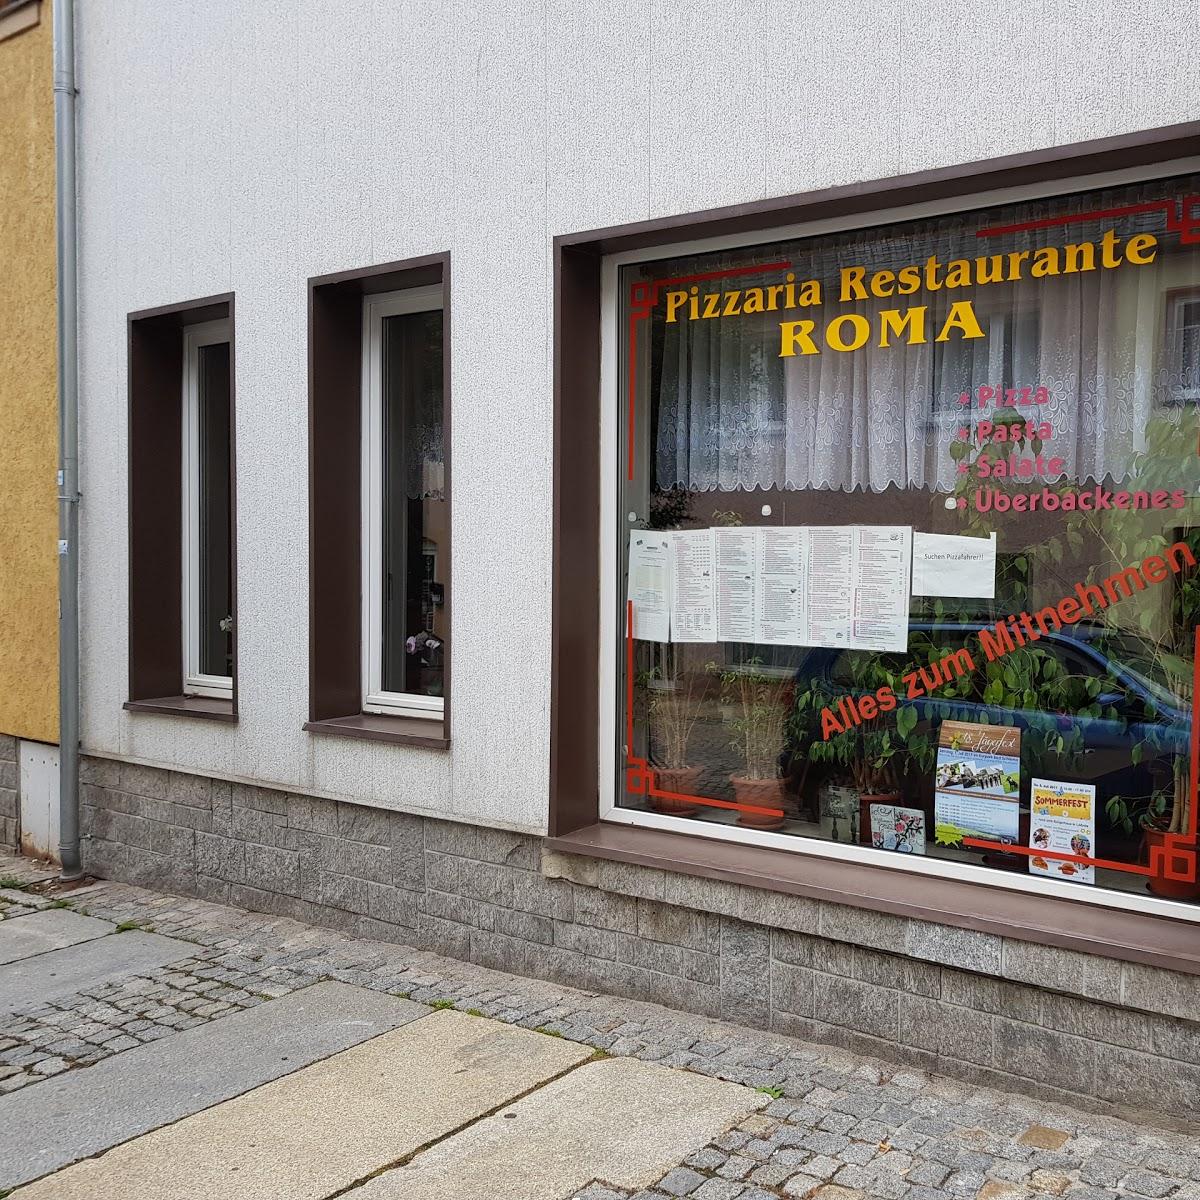 Restaurant "Singh Satnam Roma Pizzaservice" in Lößnitz